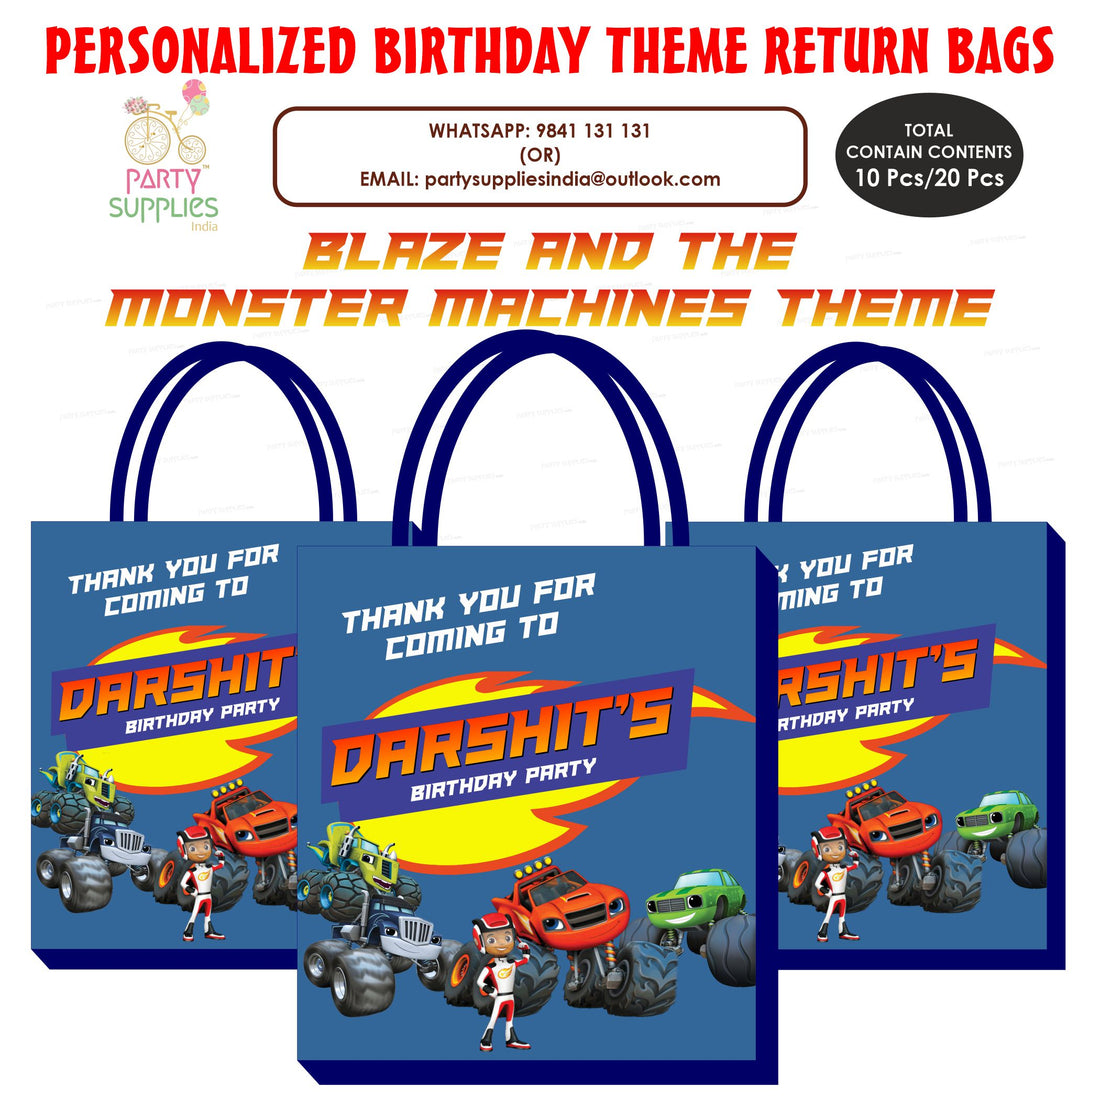 PSI Blaze and the Monster Machines Theme Return Gift Bag